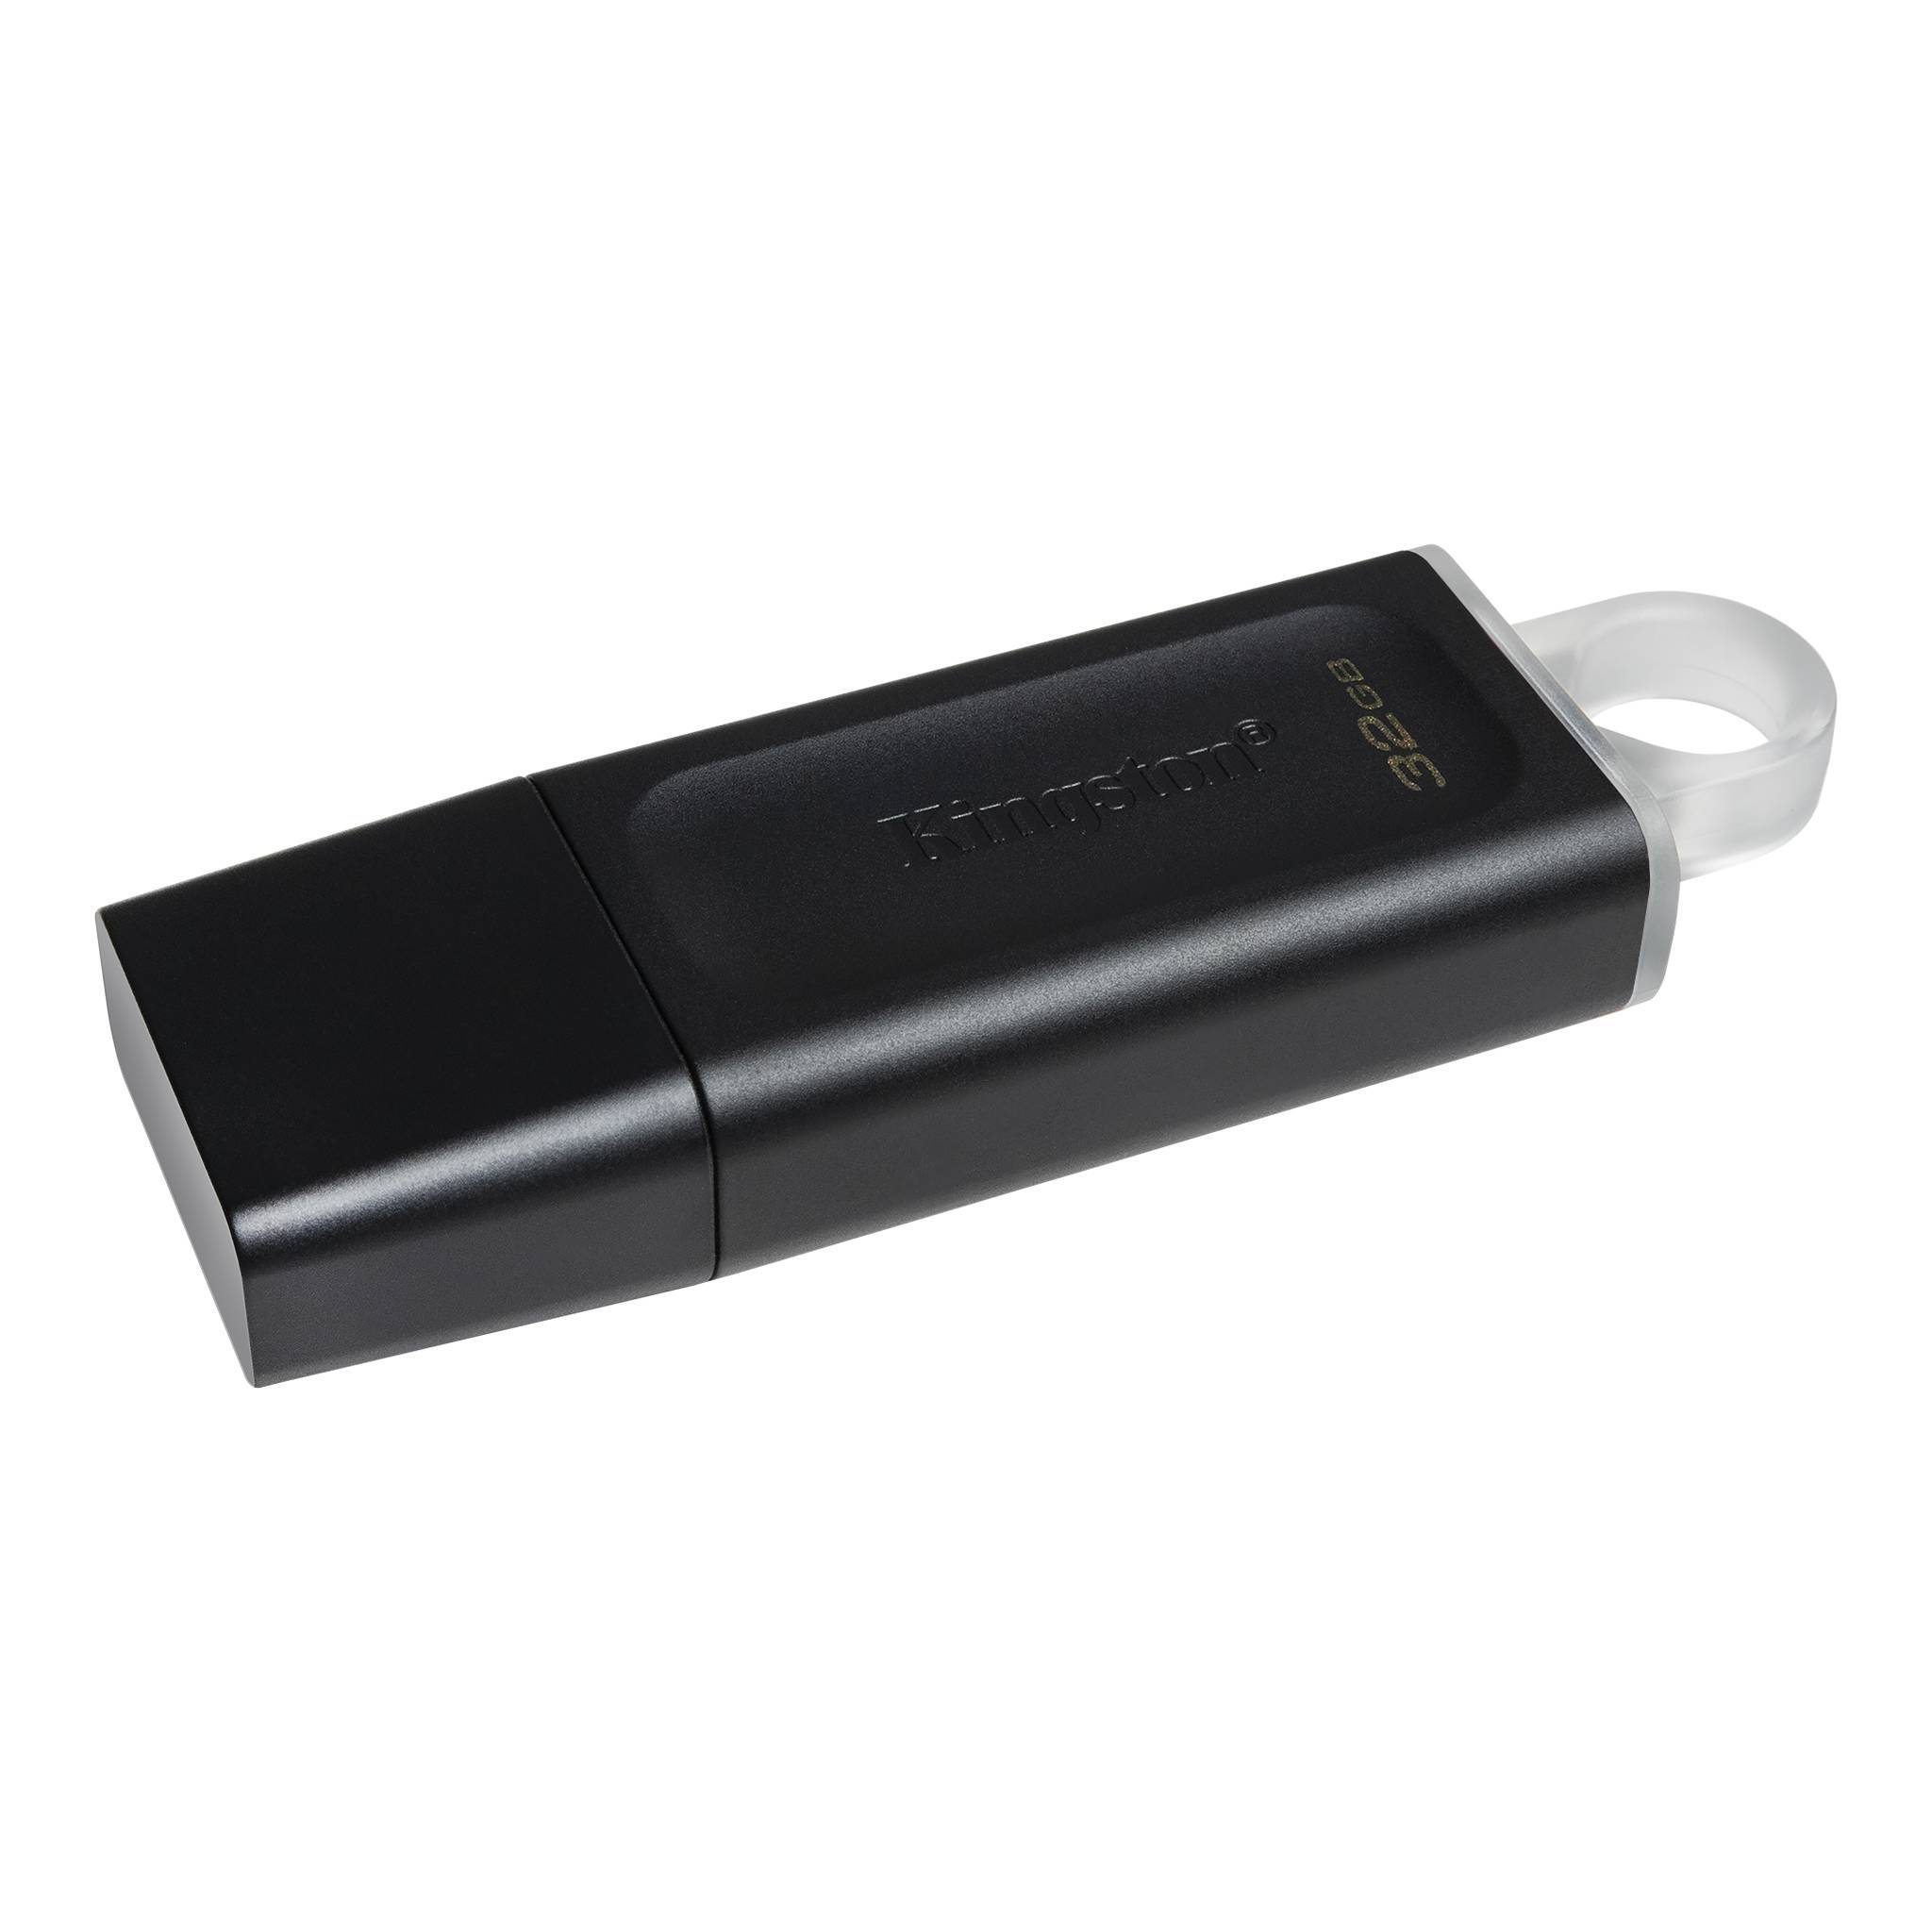 (LS) Kingston 32GB USB3.0 Flash Drive Memory Stick Thumb Key DataTraveler DT100G3 Retail Pack 5yrs warranty ~USK-DT100G3-32F DT100G3/32GBFR